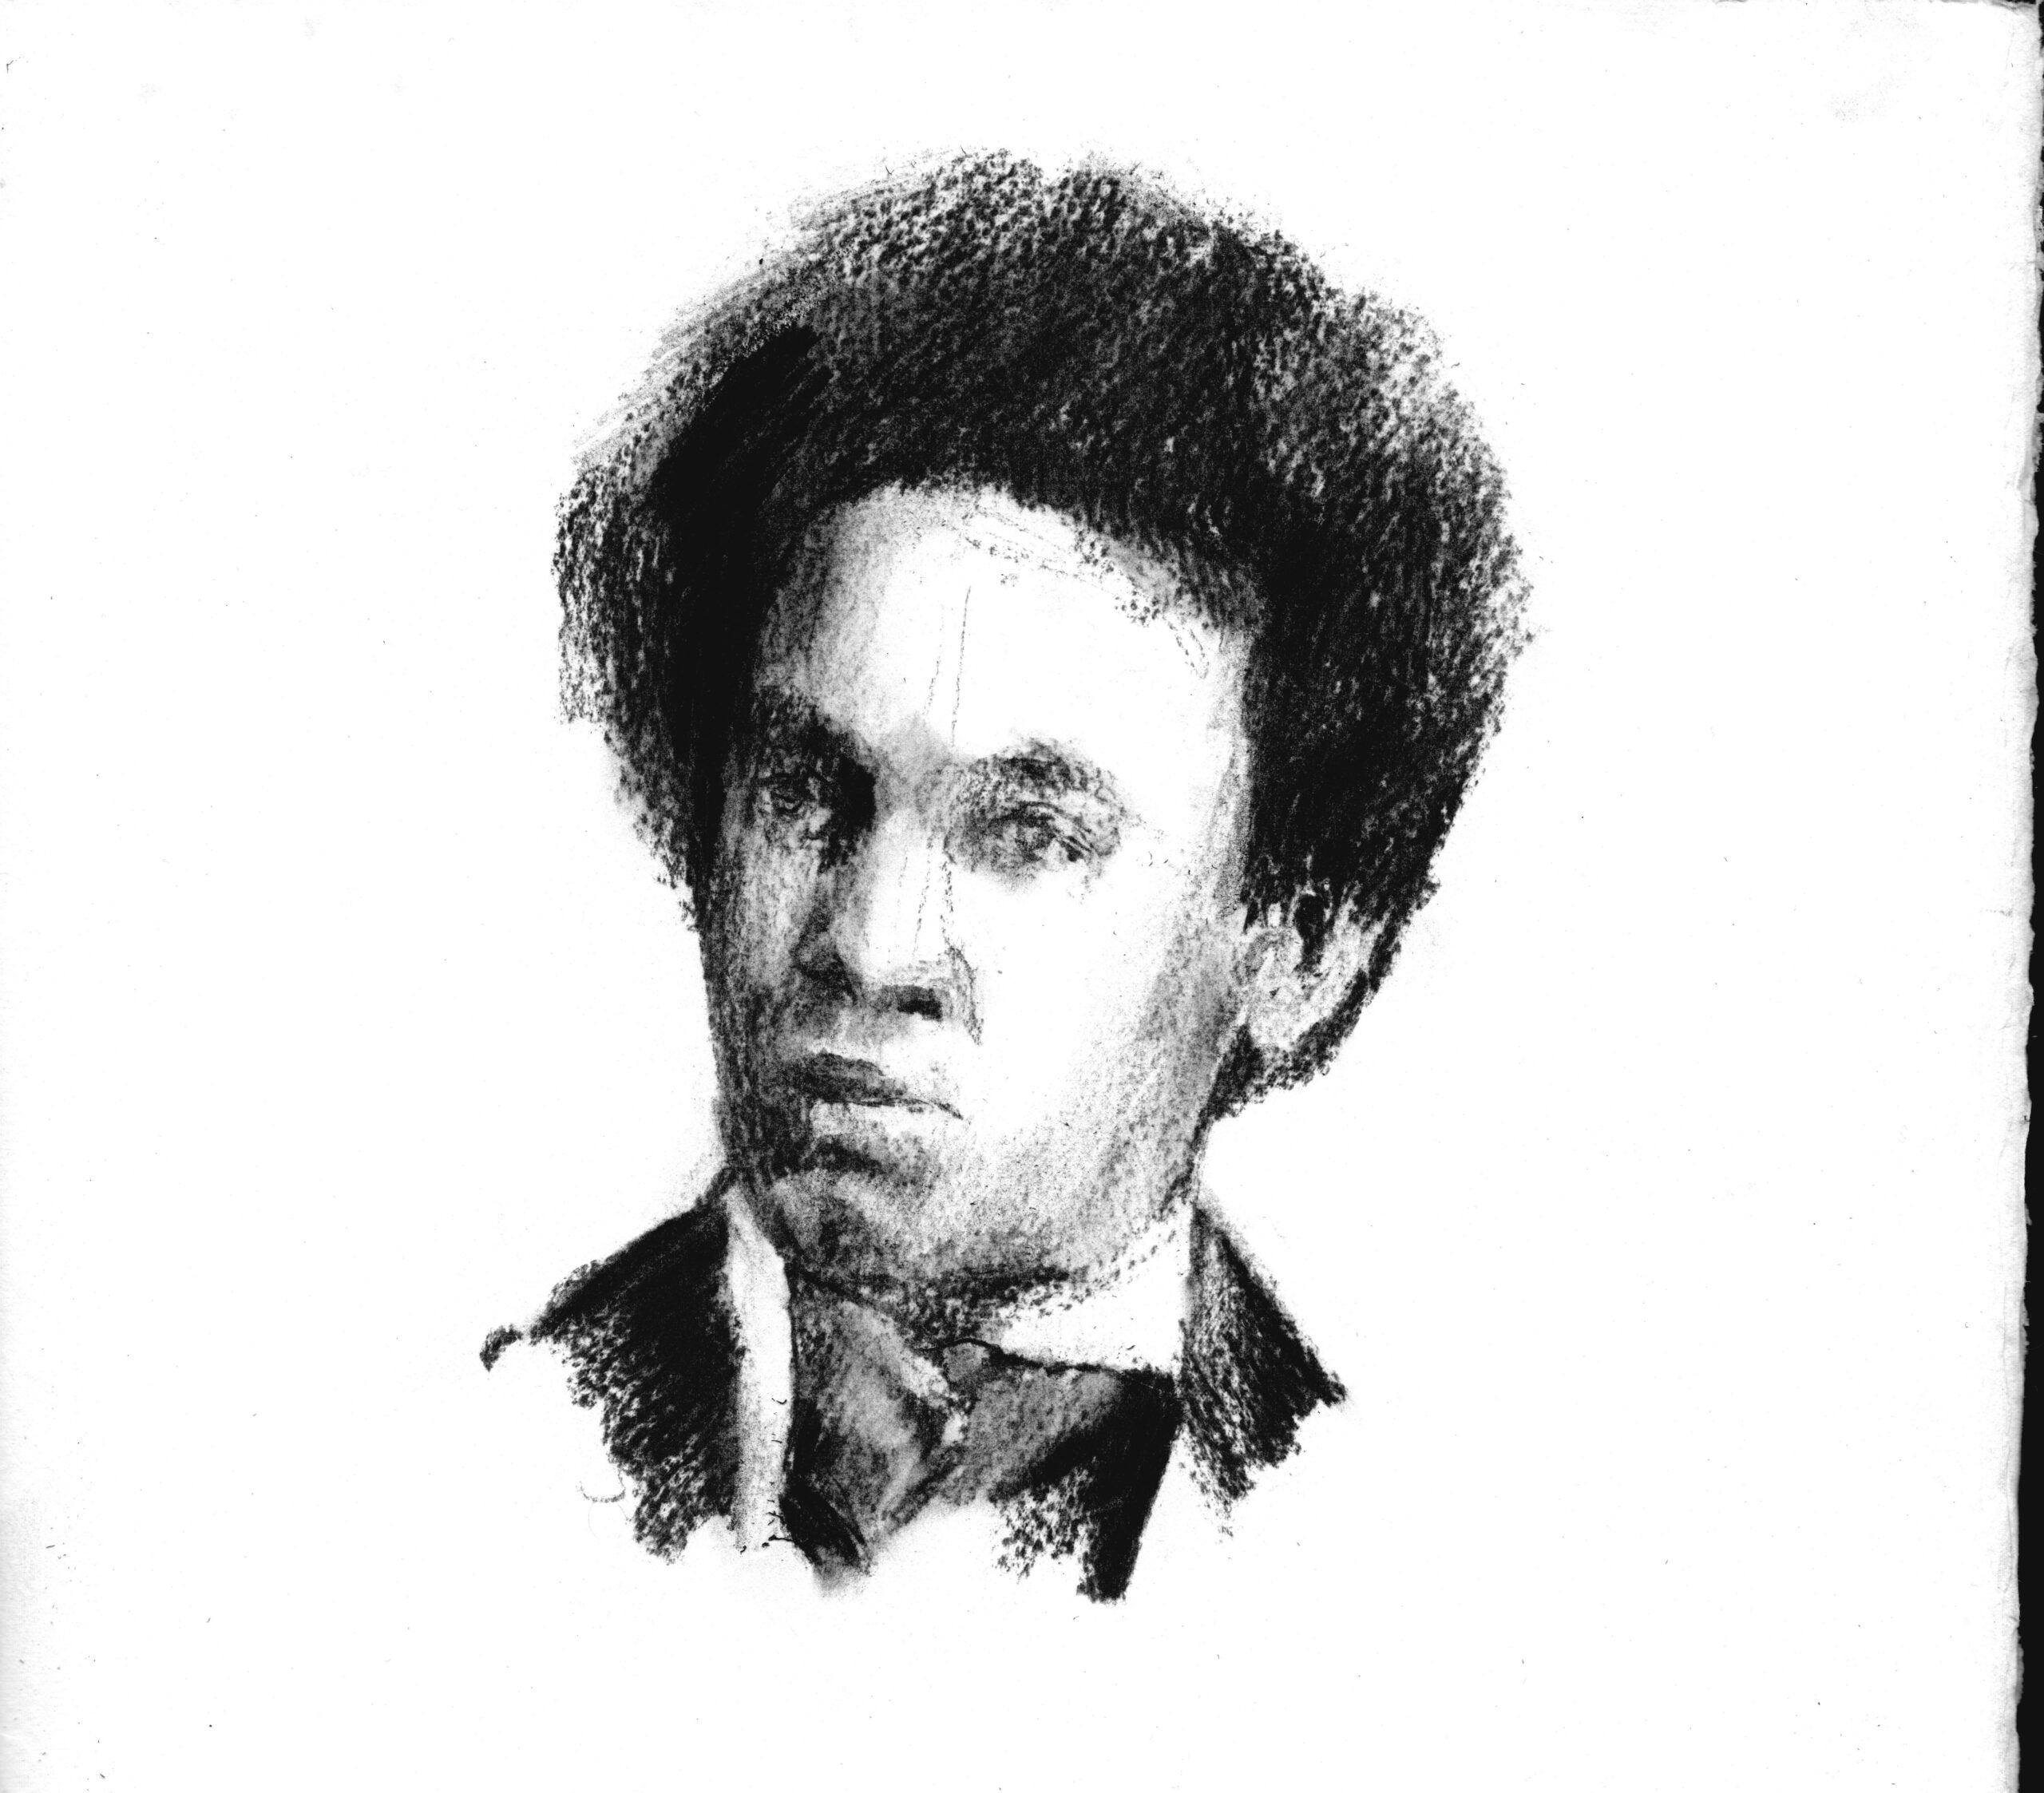 Charcoal portrait of Samuel Coleridge-Taylor